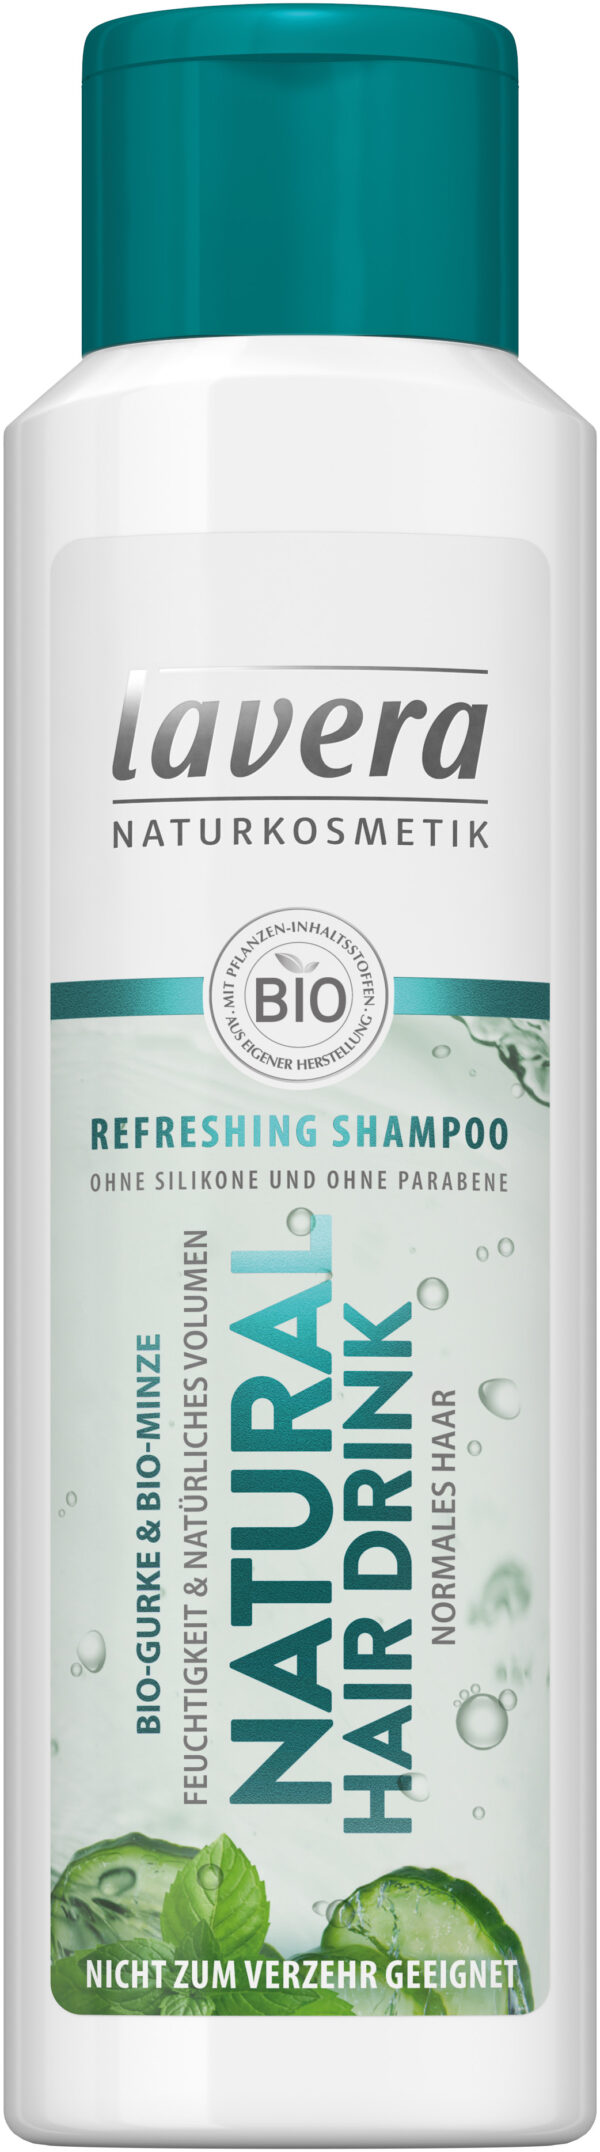 lavera Natural Hair Drink Refreshing Shampoo 250ml